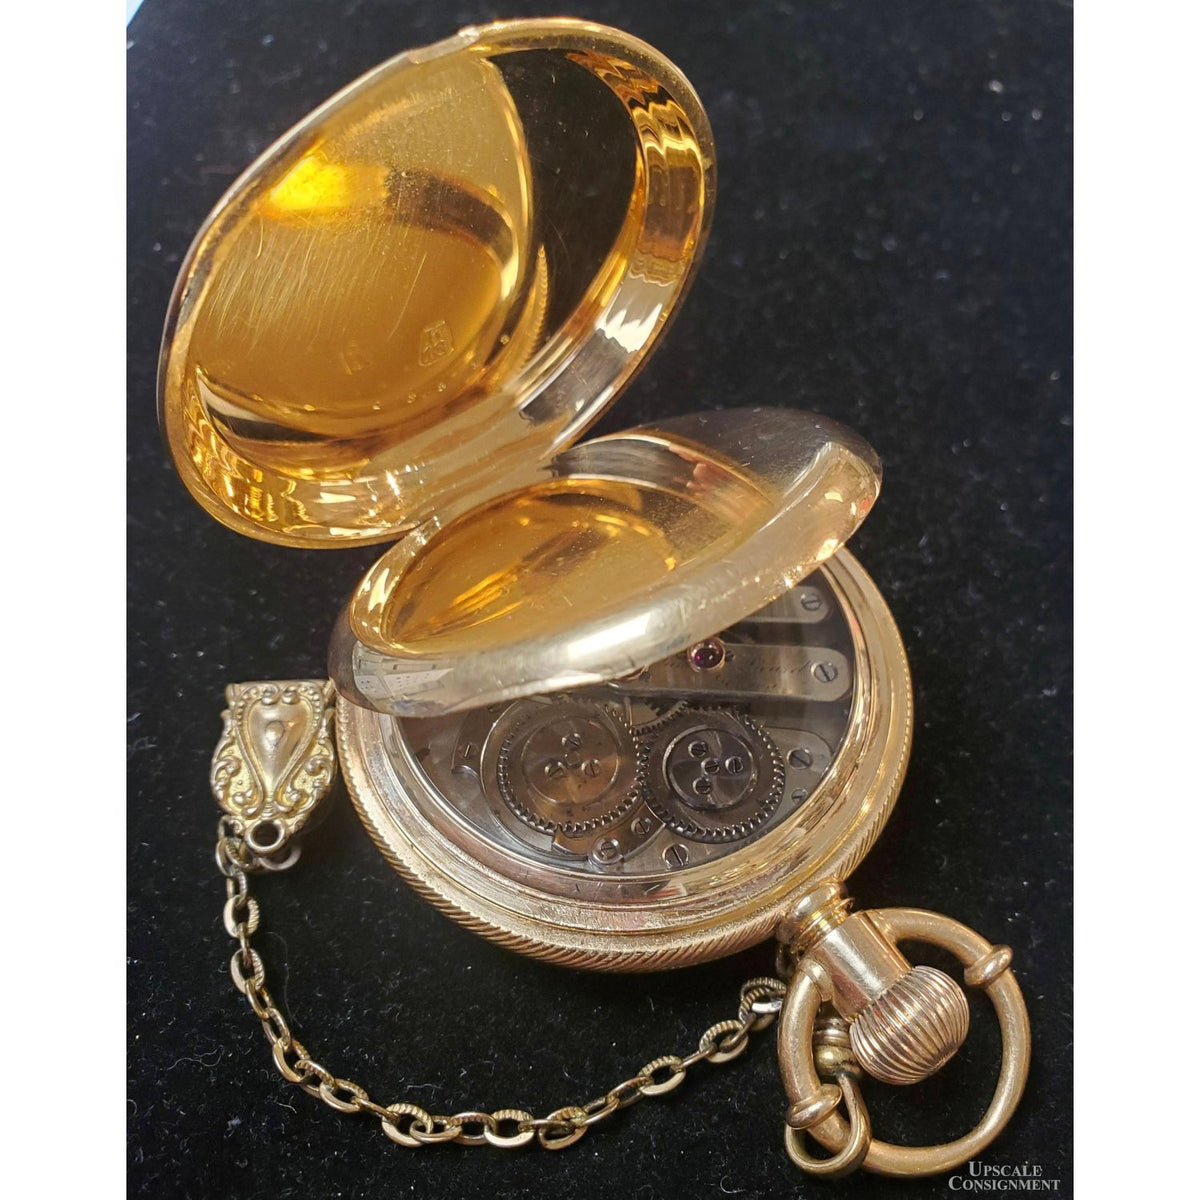 Circa 1880s 18K James Picard Swiss Hunter Case Pocket Watch w/Fob